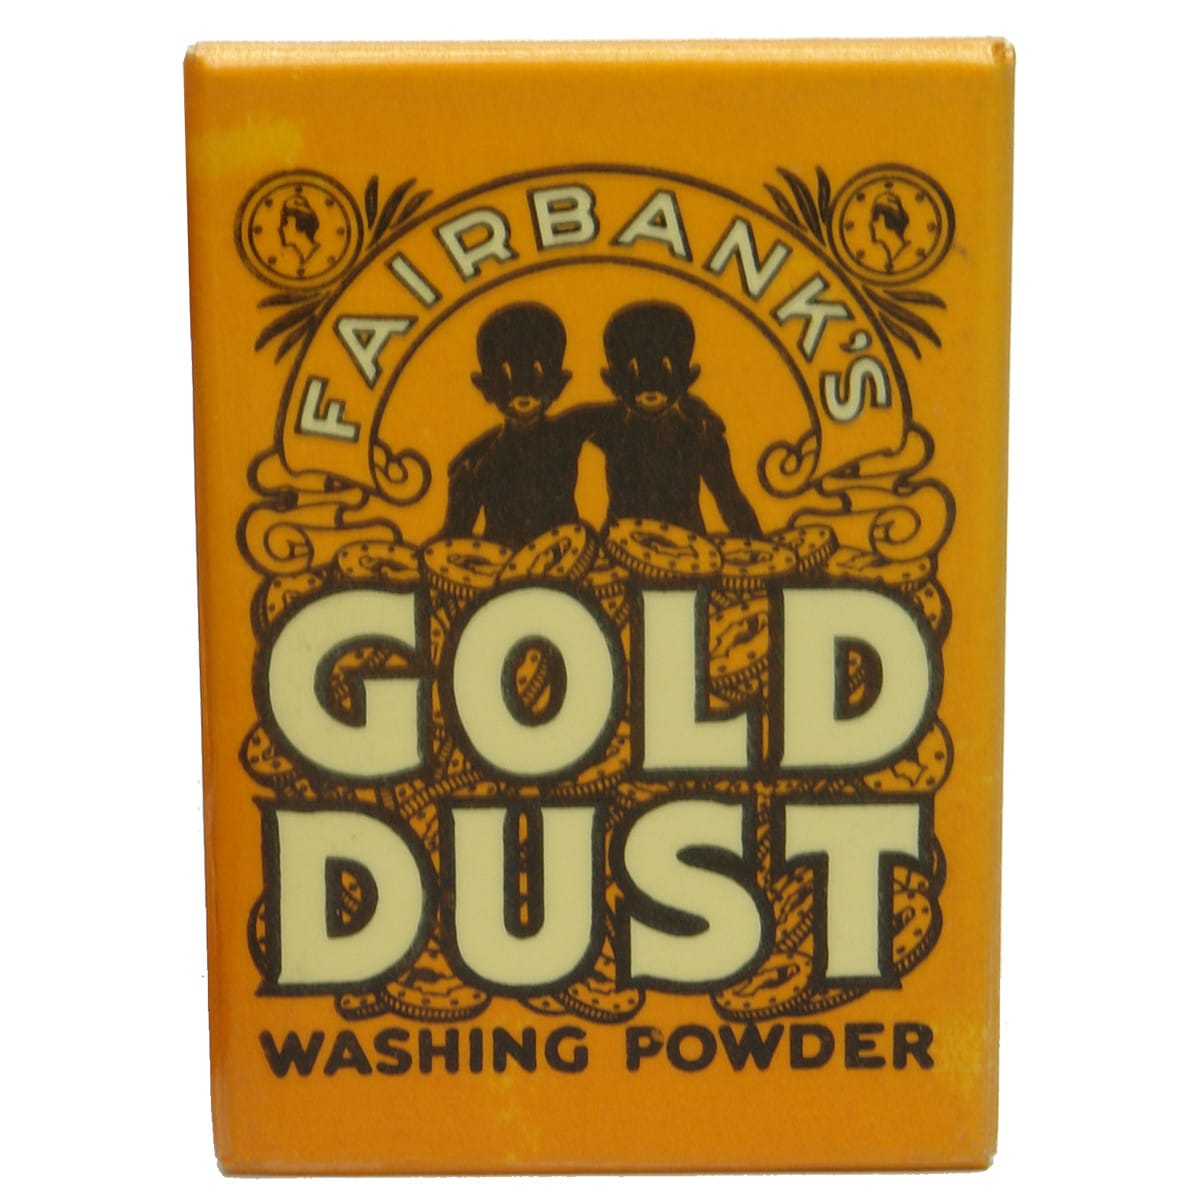 Advertising hand held mirror. Fairbank's Gold Dust Washing Powder.